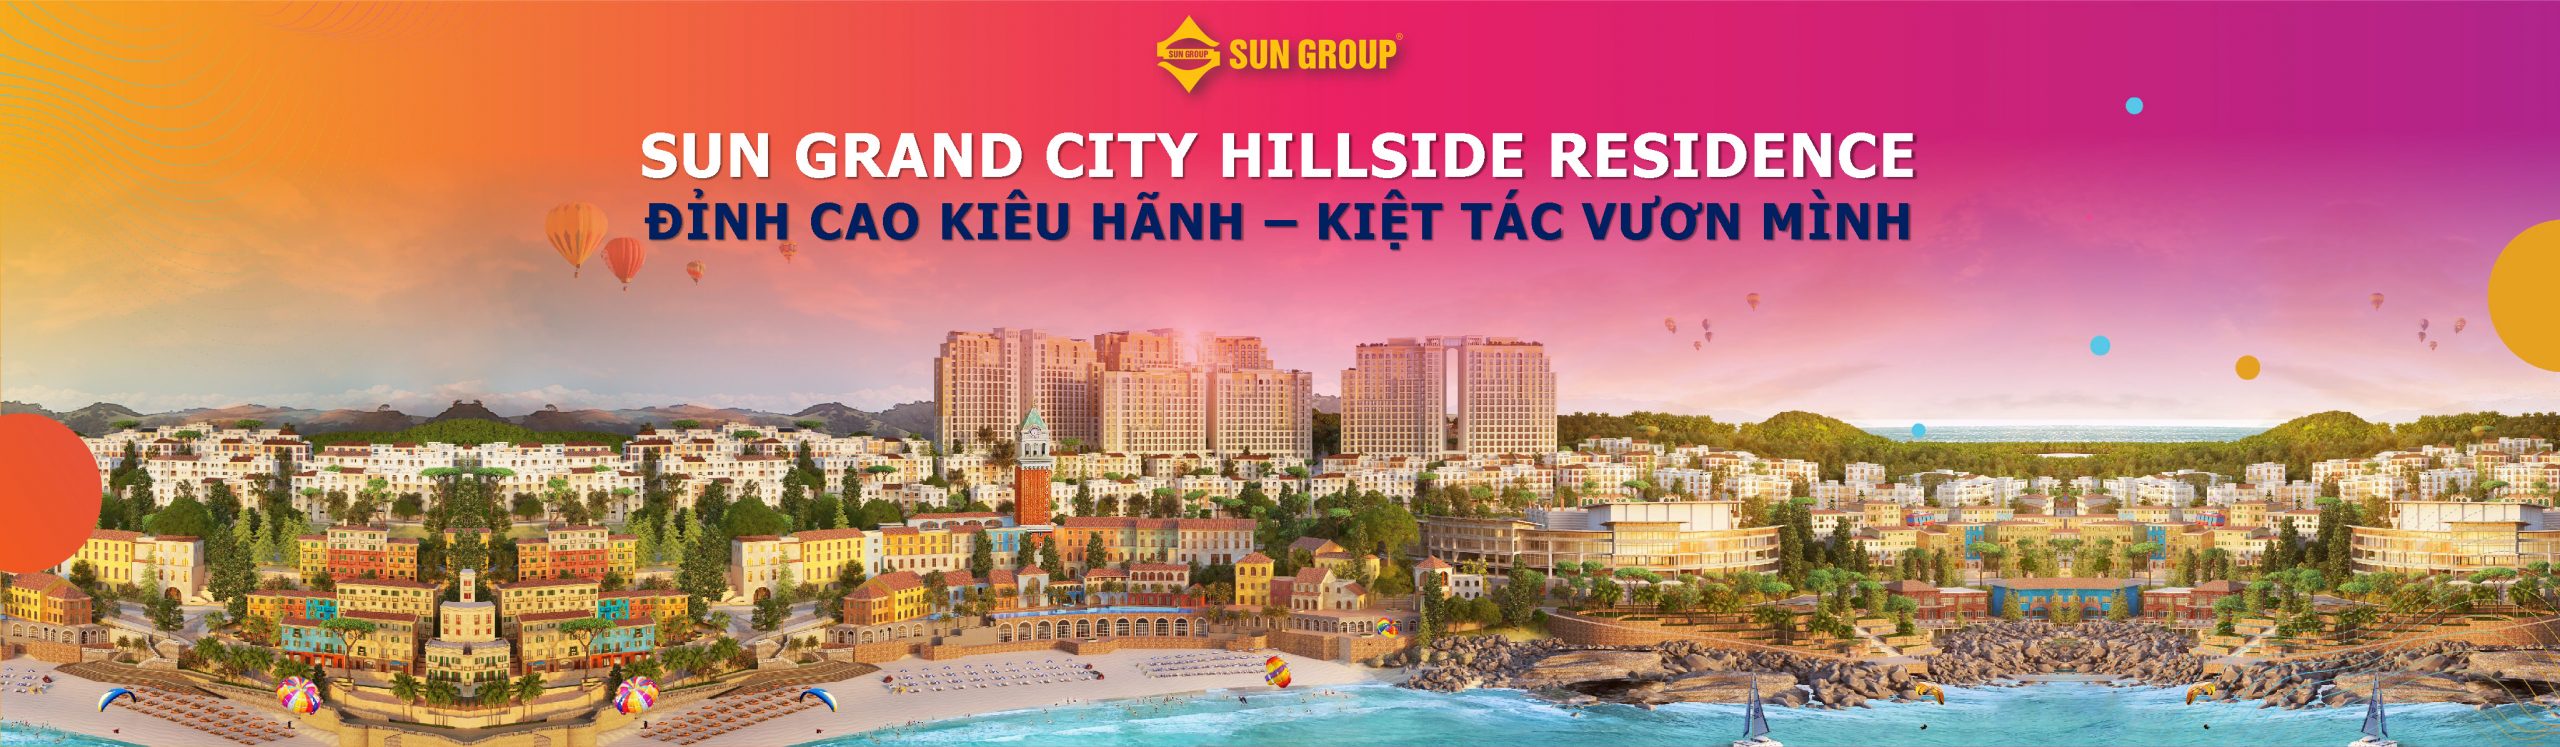 Sun Grand City Hill Side Residences - Hill Side Địa Trung Hải